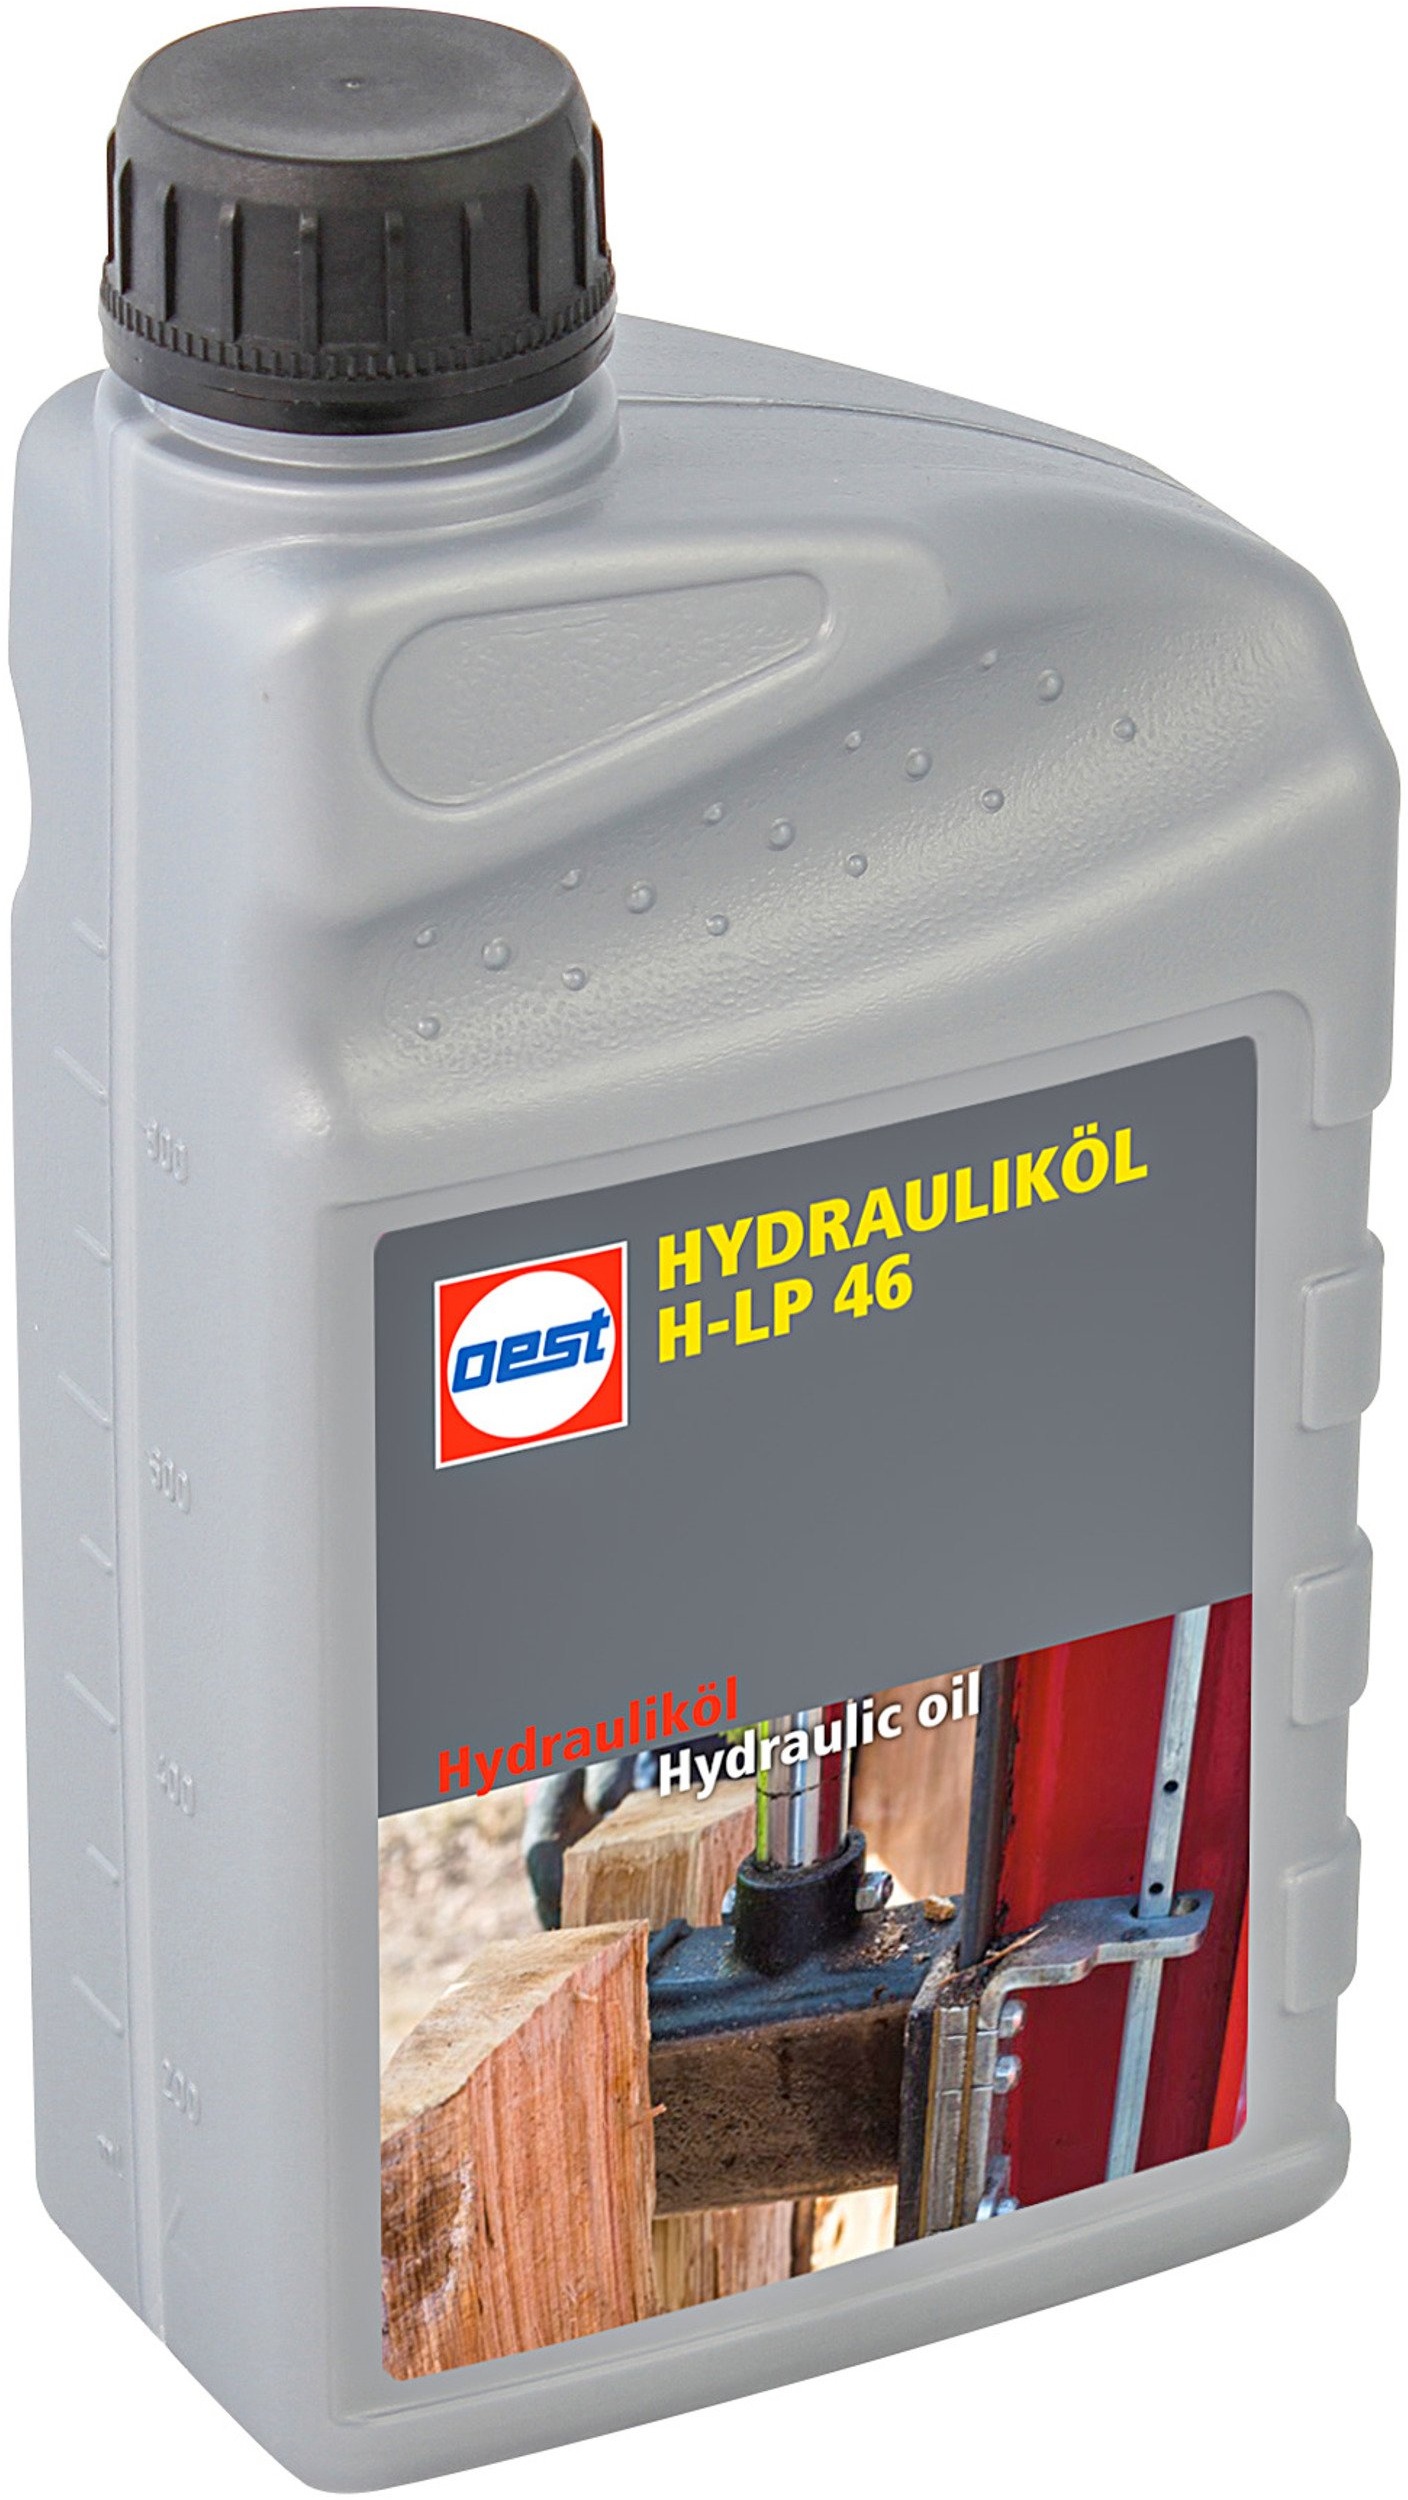 Oest Hydrauliköl H-LP 46